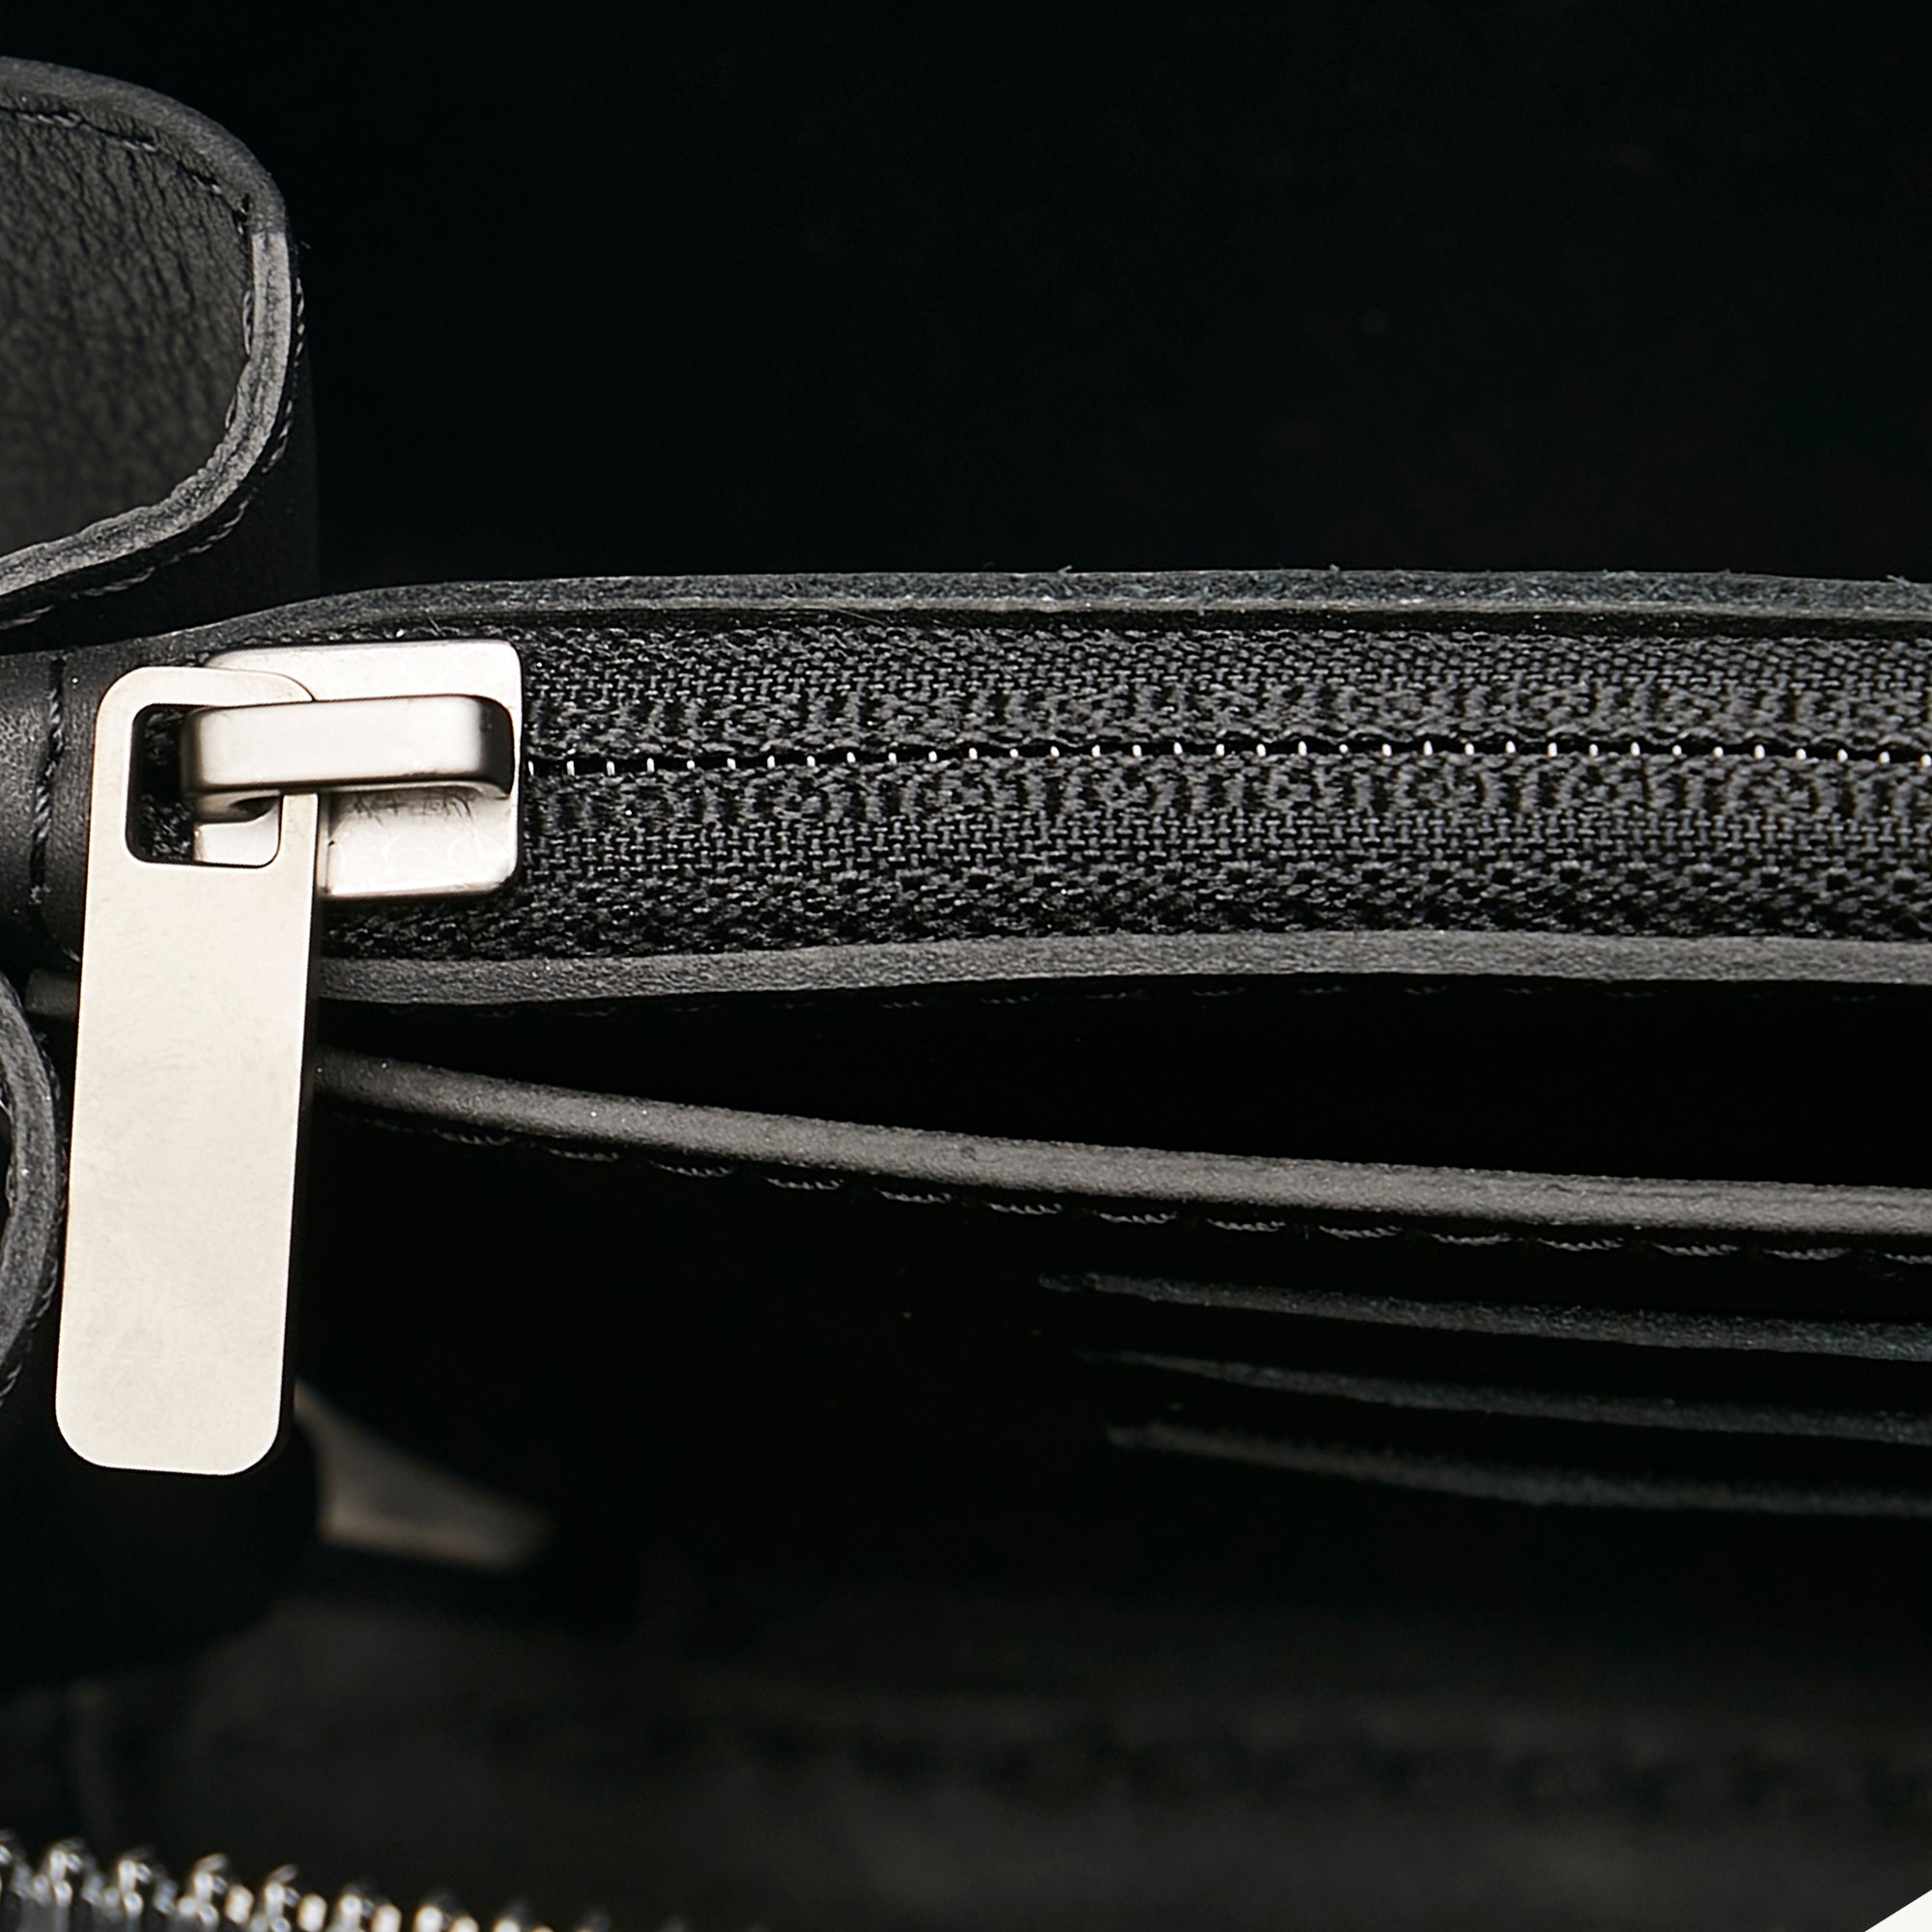 Black Louis Vuitton Taurillion Monogram Horizon Clutch Bag